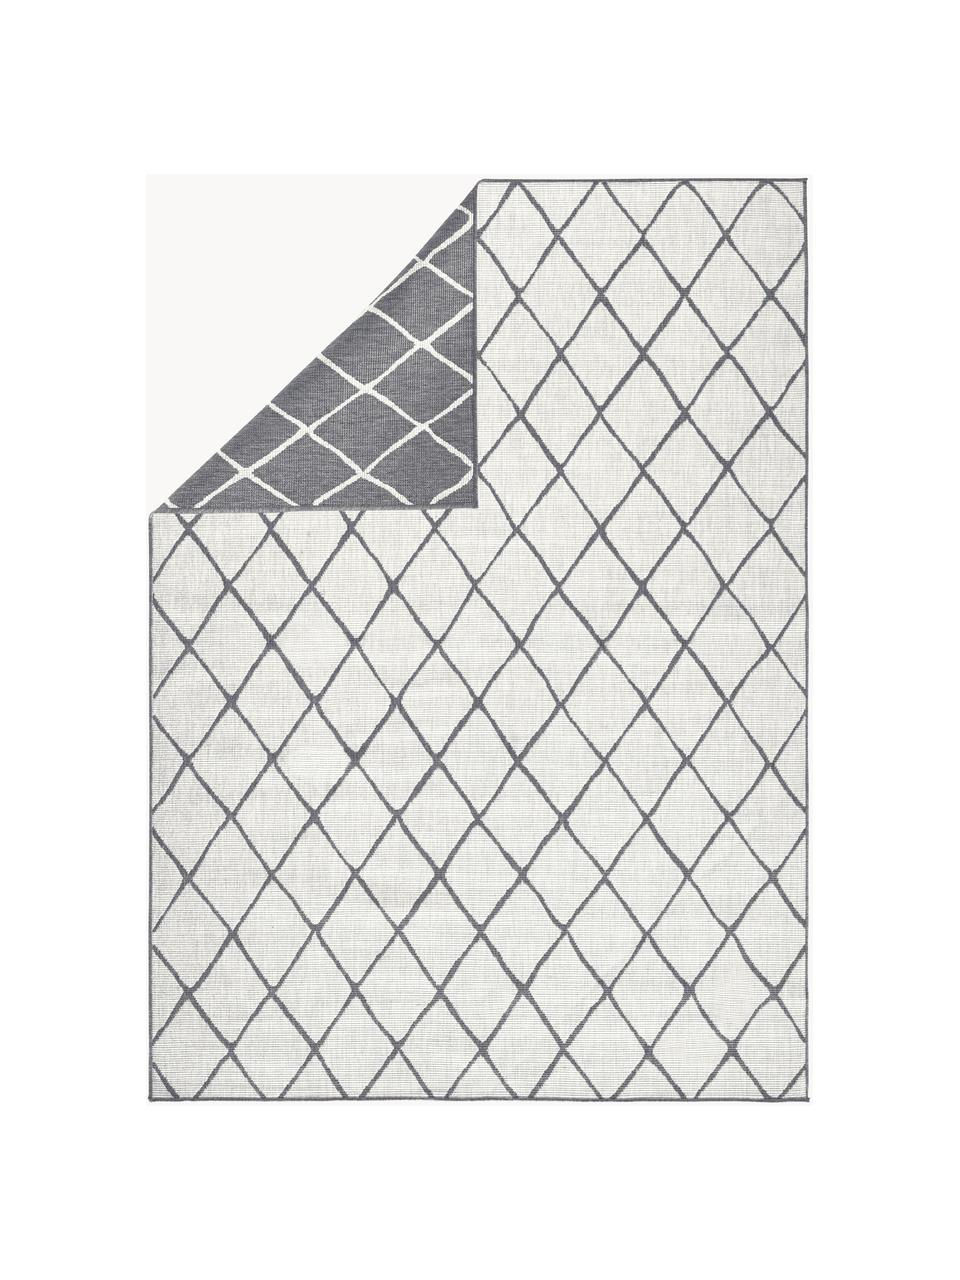 Interiérový a exteriérový oboustranný koberec Malaga, 100 % polypropylen, Tlumeně bílá, šedá, Š 200 cm, D 290 cm (velikost L)